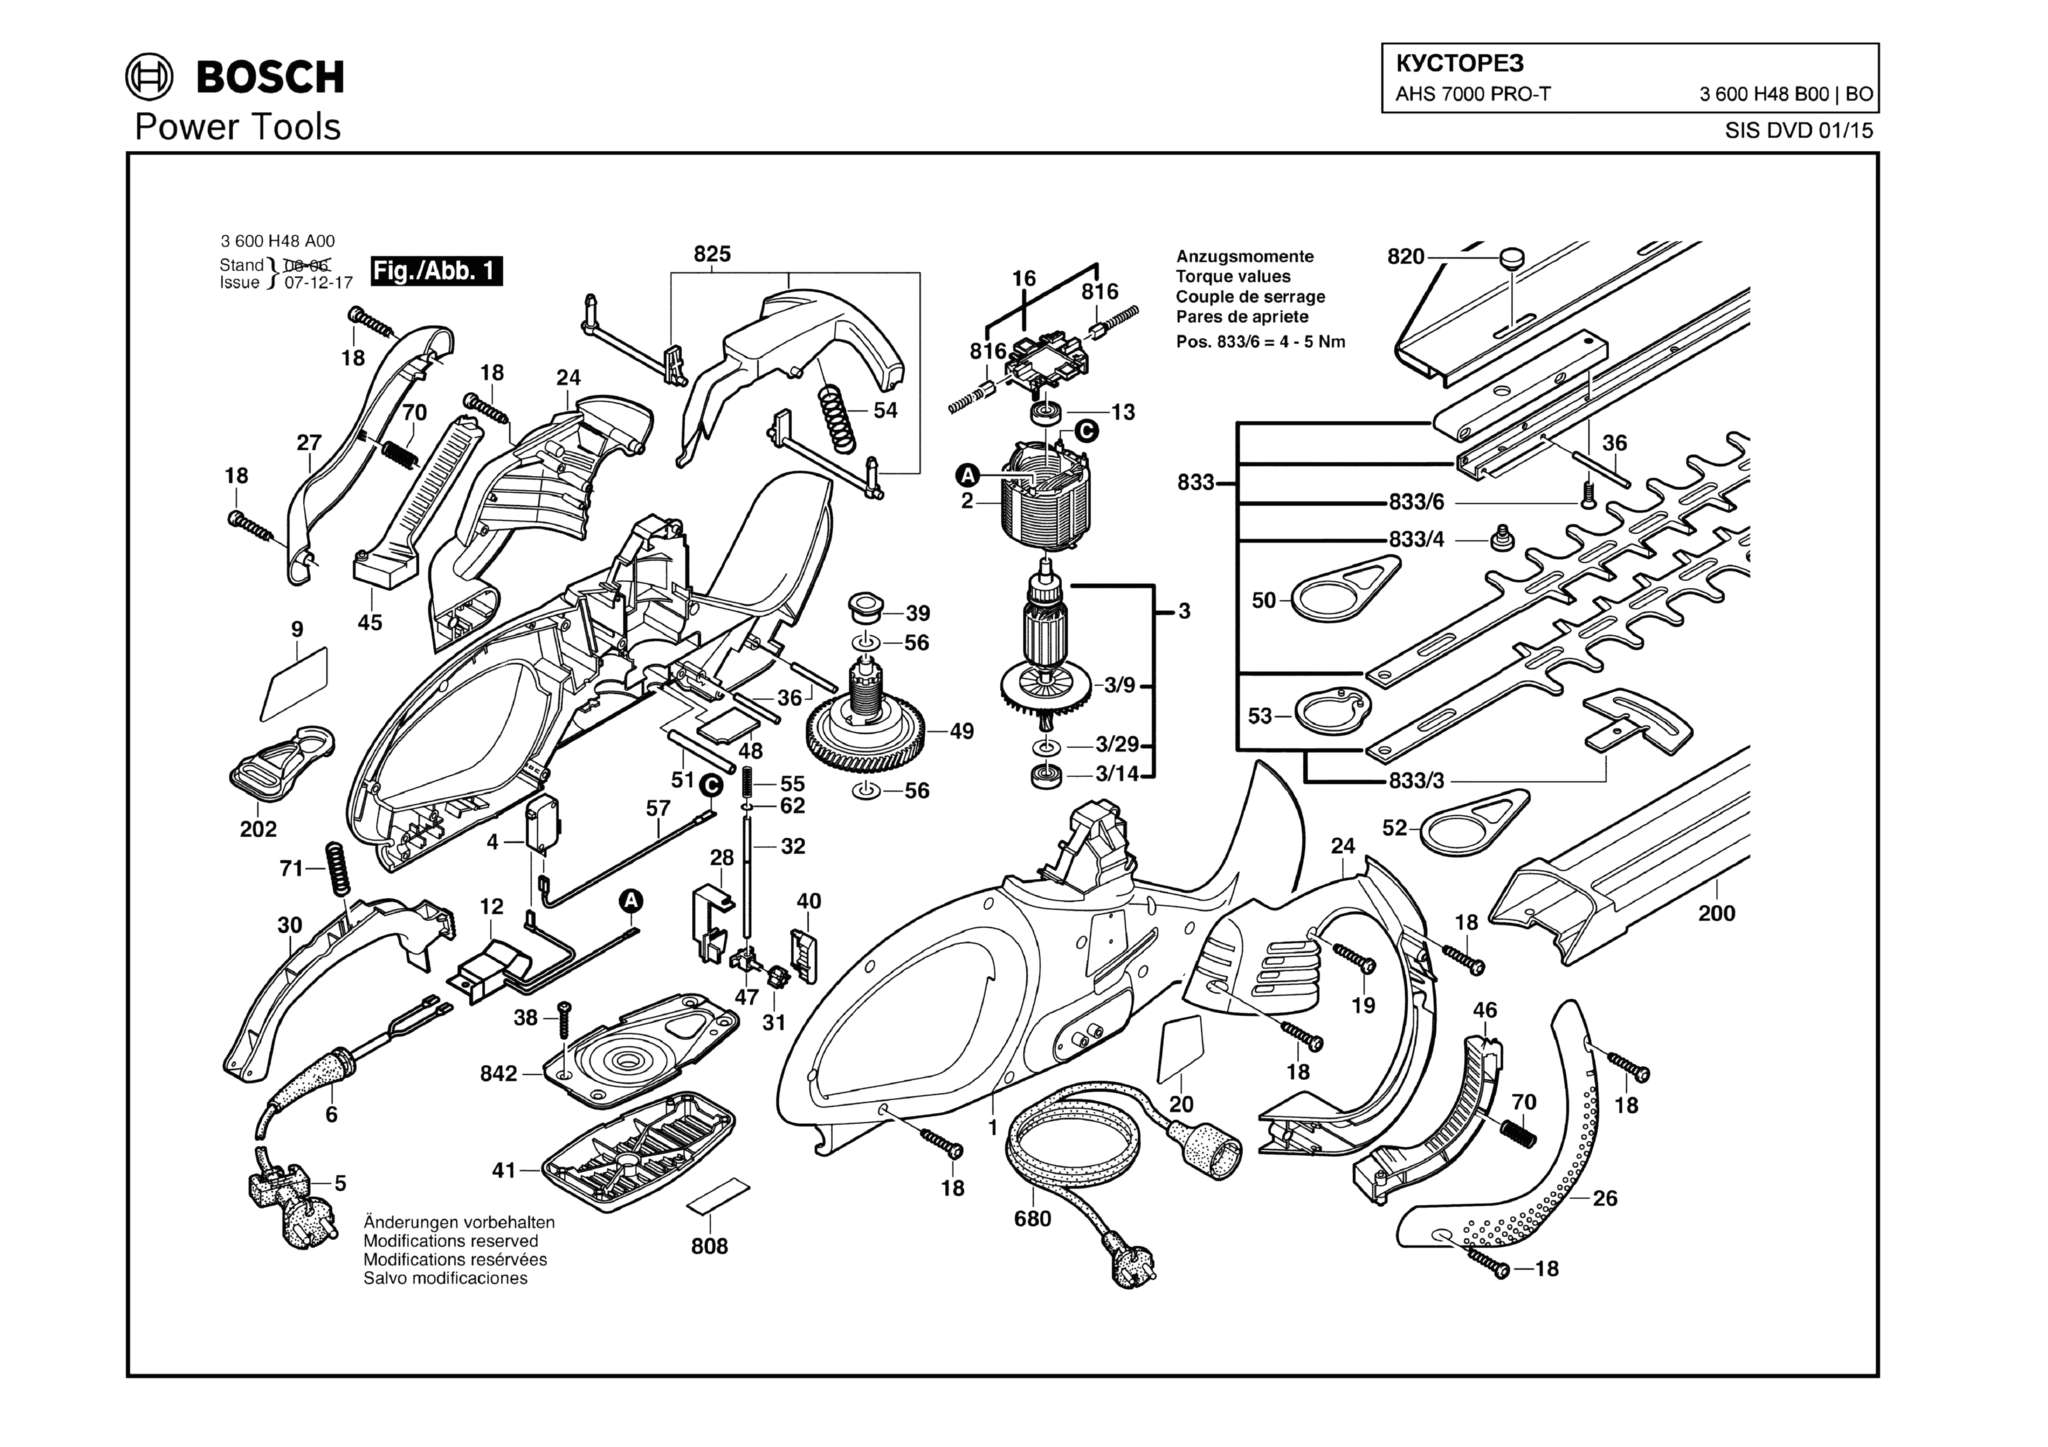 Запчасти, схема и деталировка Bosch AHS 7000 PRO-T (ТИП 3600H48B00)